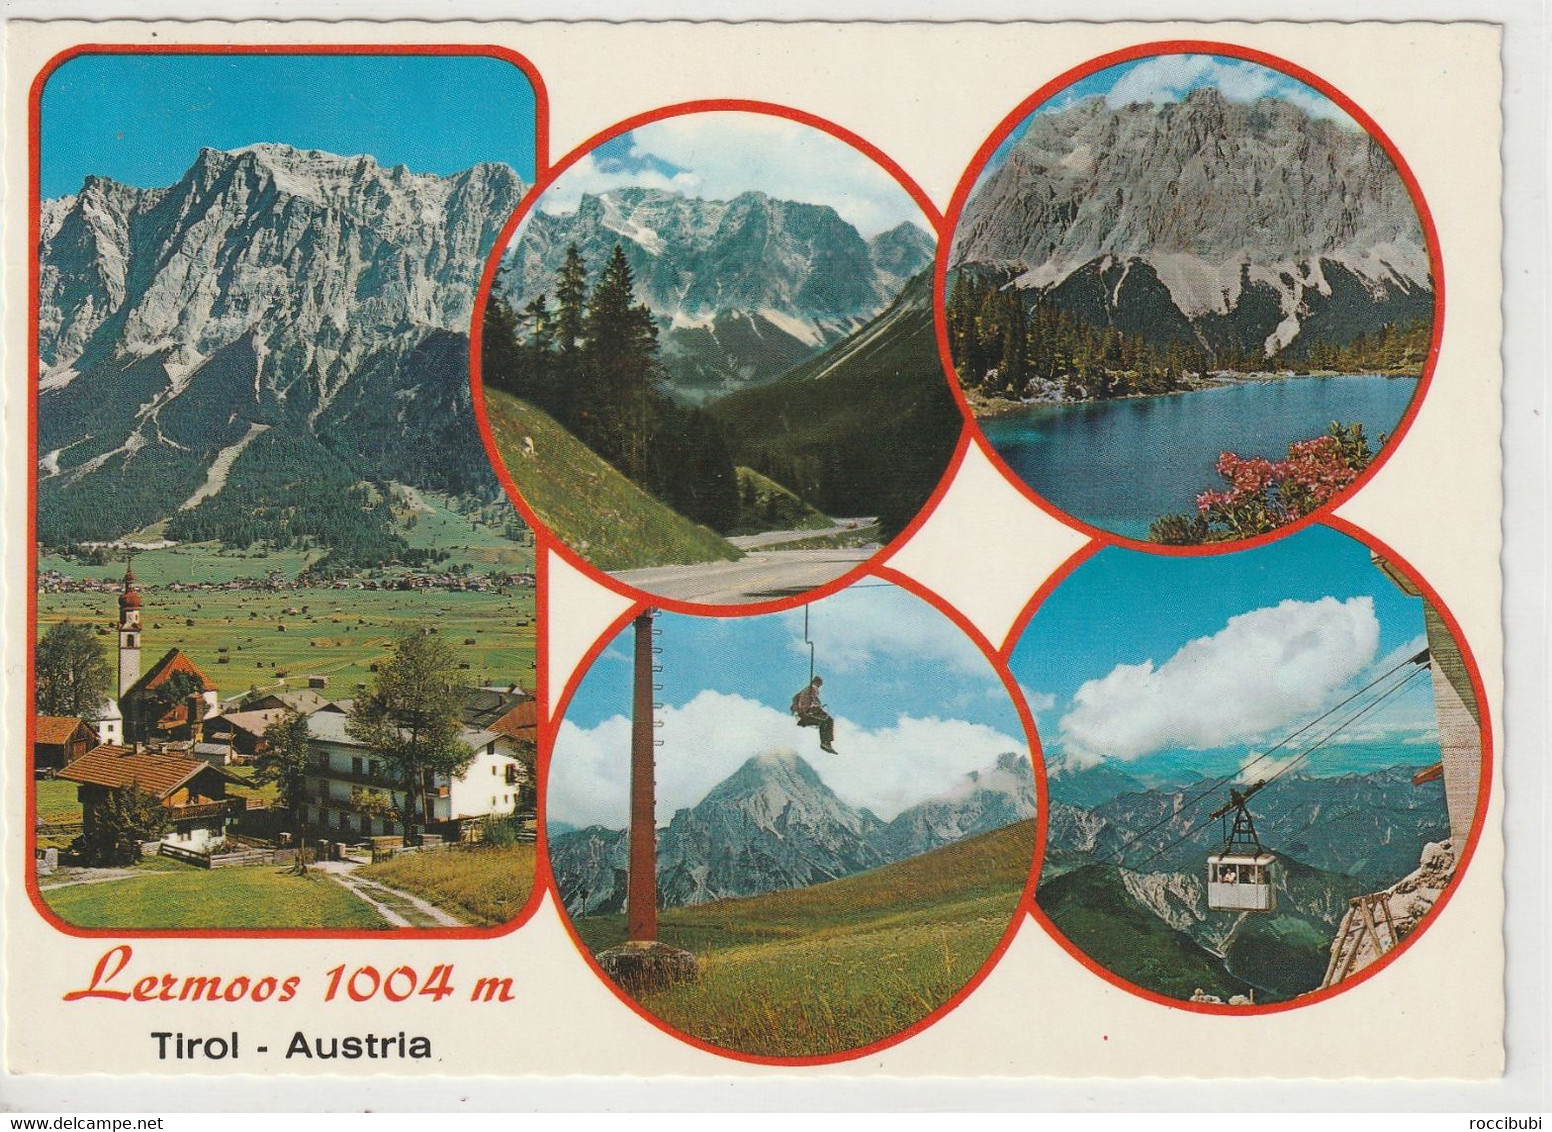 Lermoos, Tirol, Österreich - Lermoos